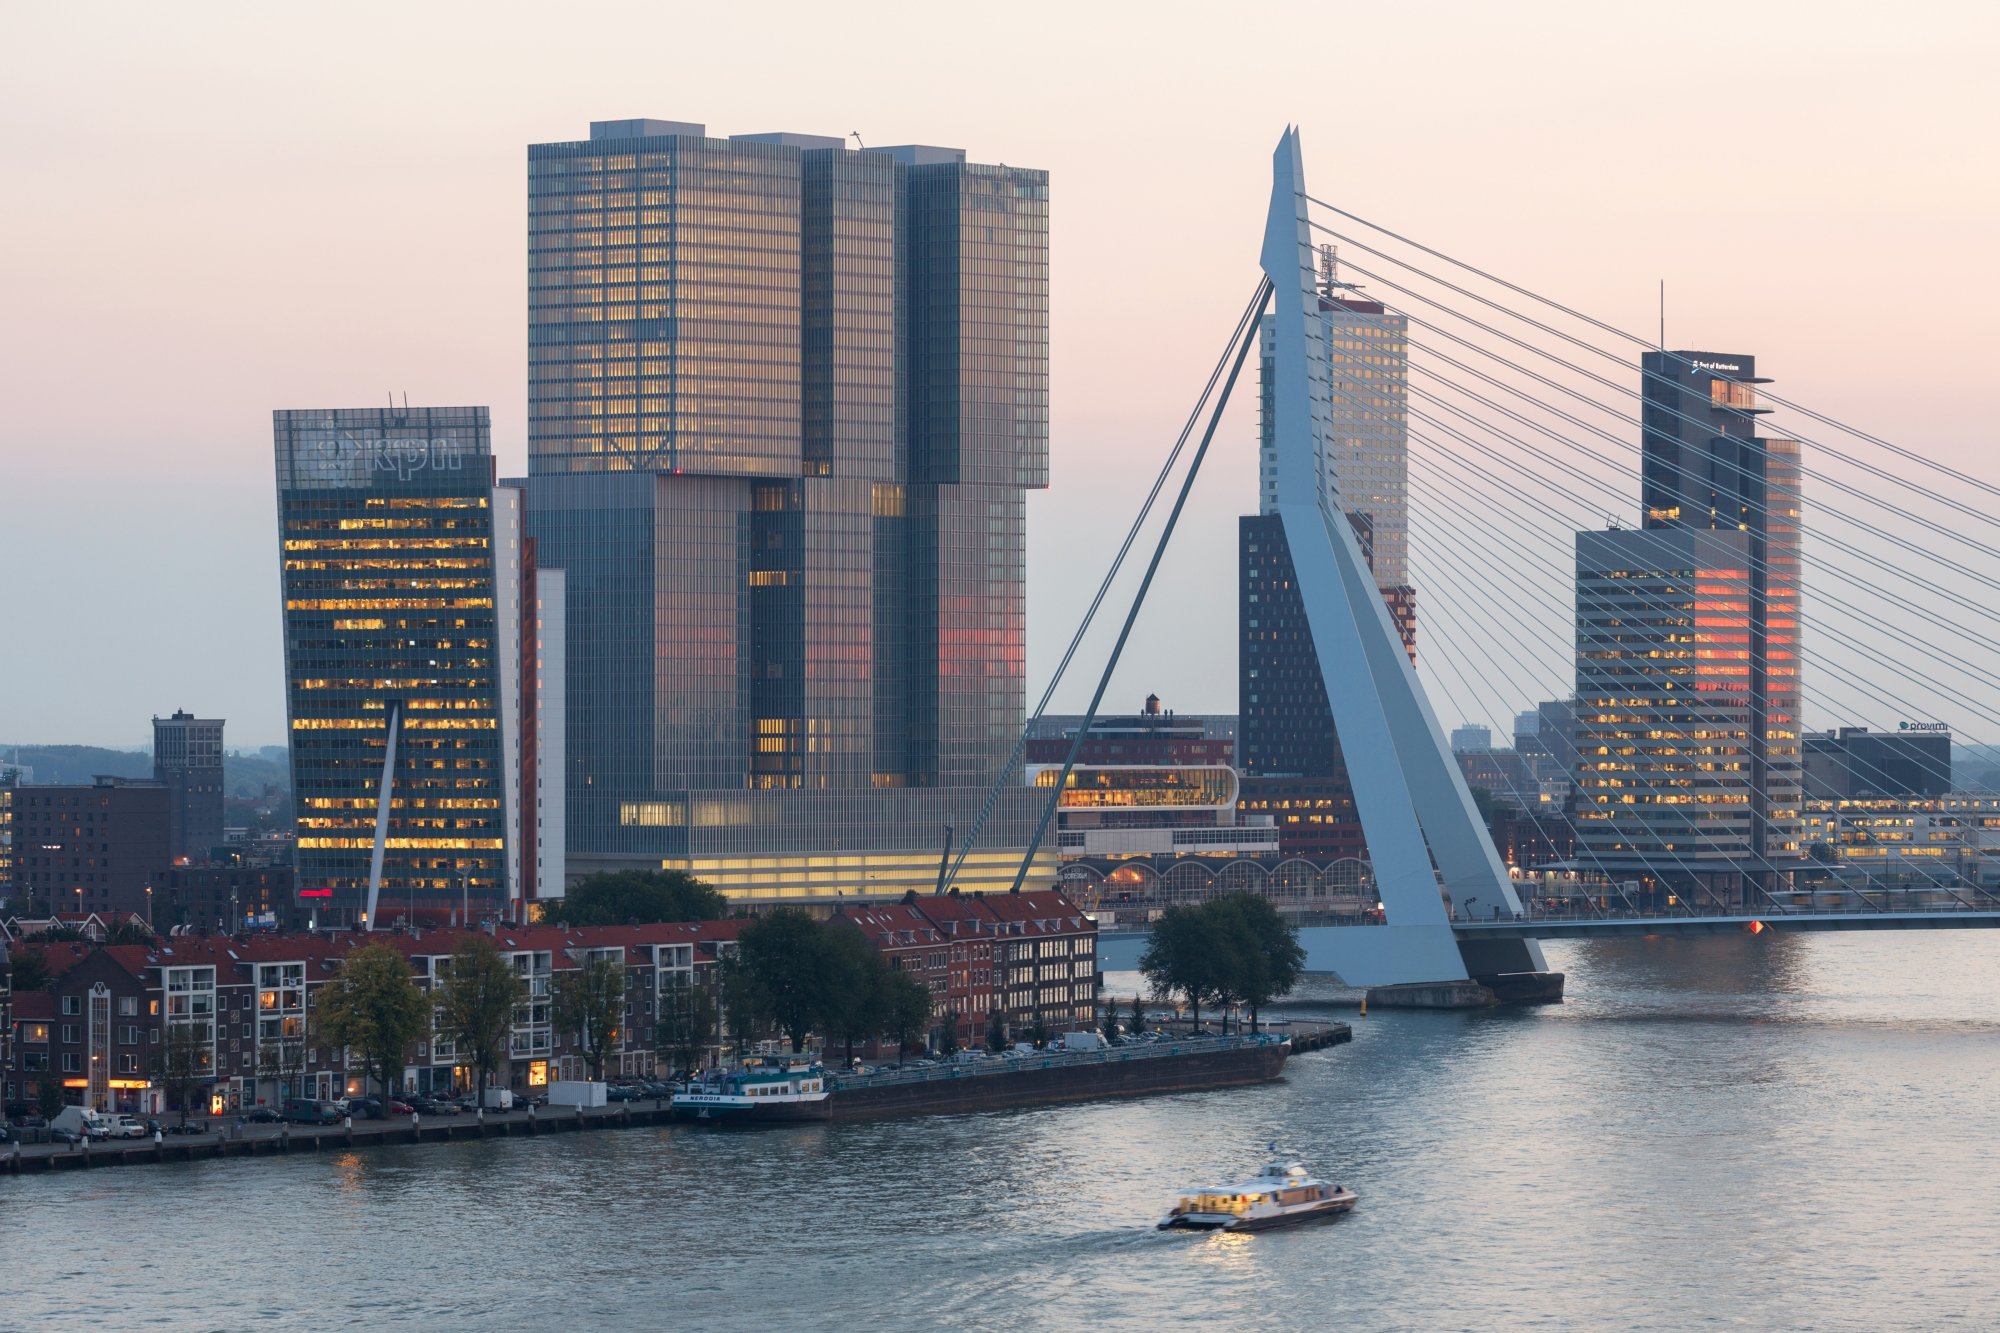 1448-Rotterdam-Image-Bank.jpg